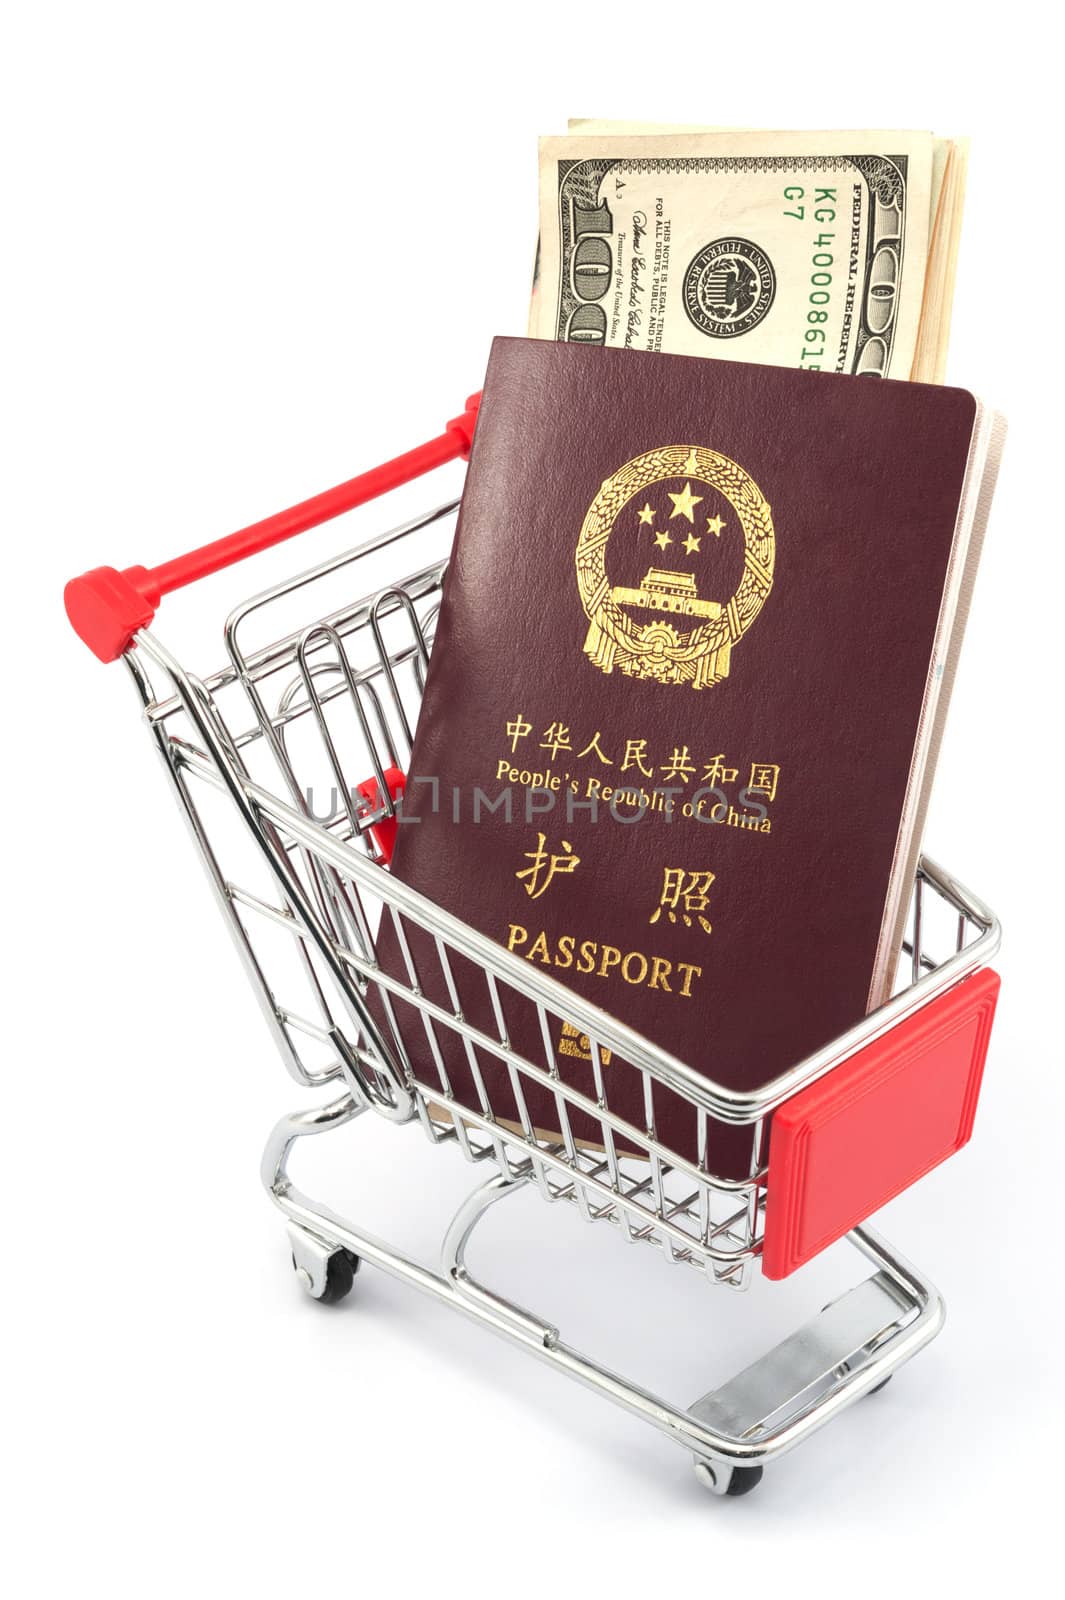 Chinese passport in cart by raywoo